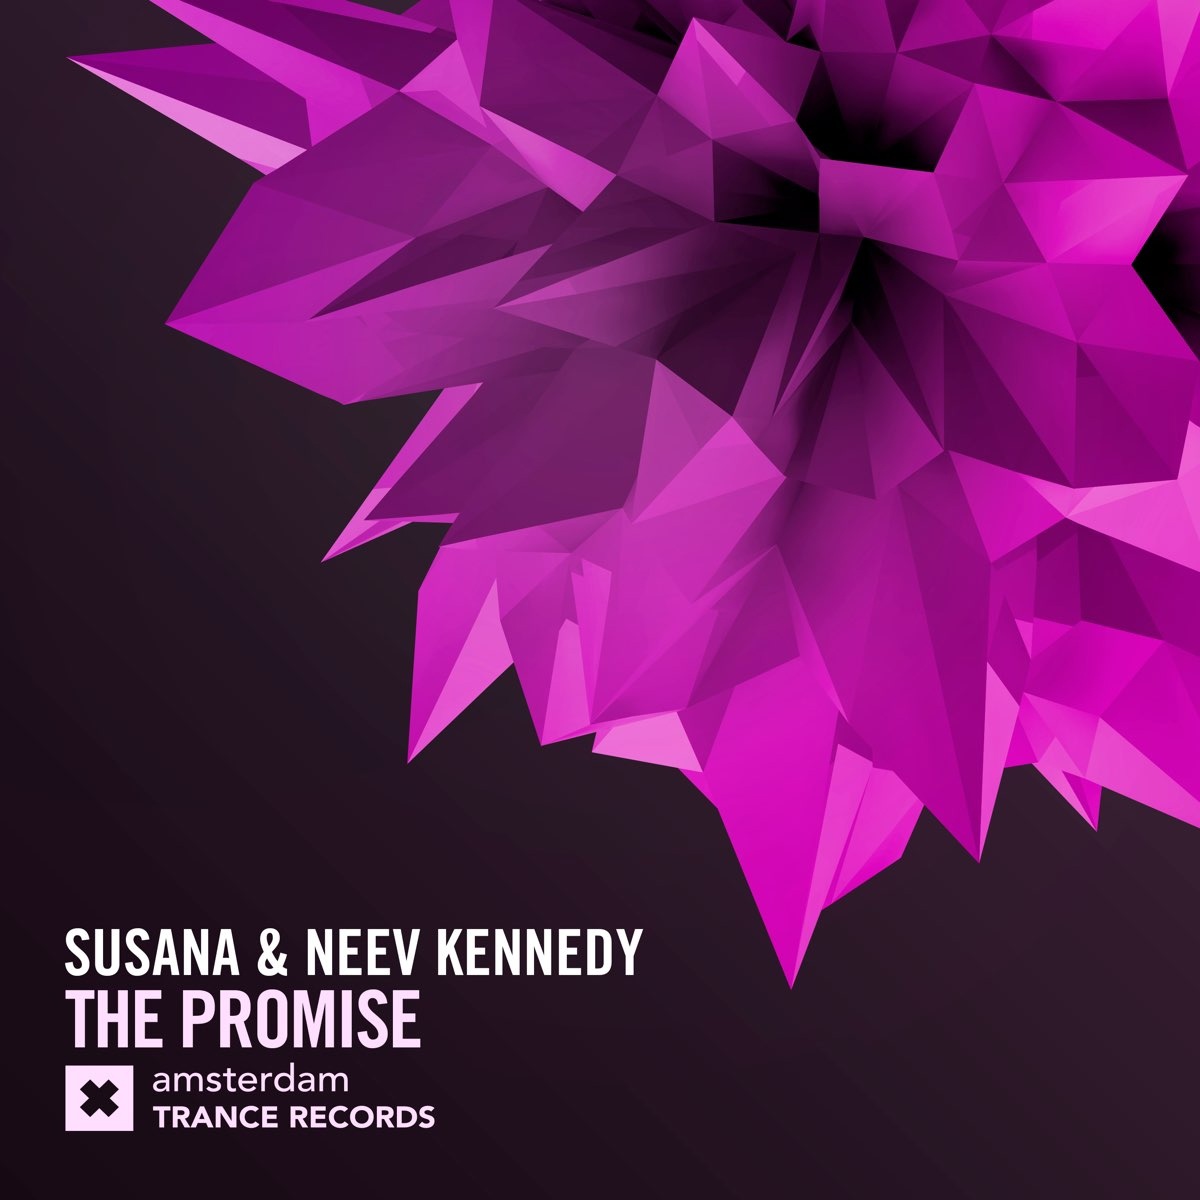 Susana & Neev Kennedy - The Promise (London & Niko Uplifting Remix)